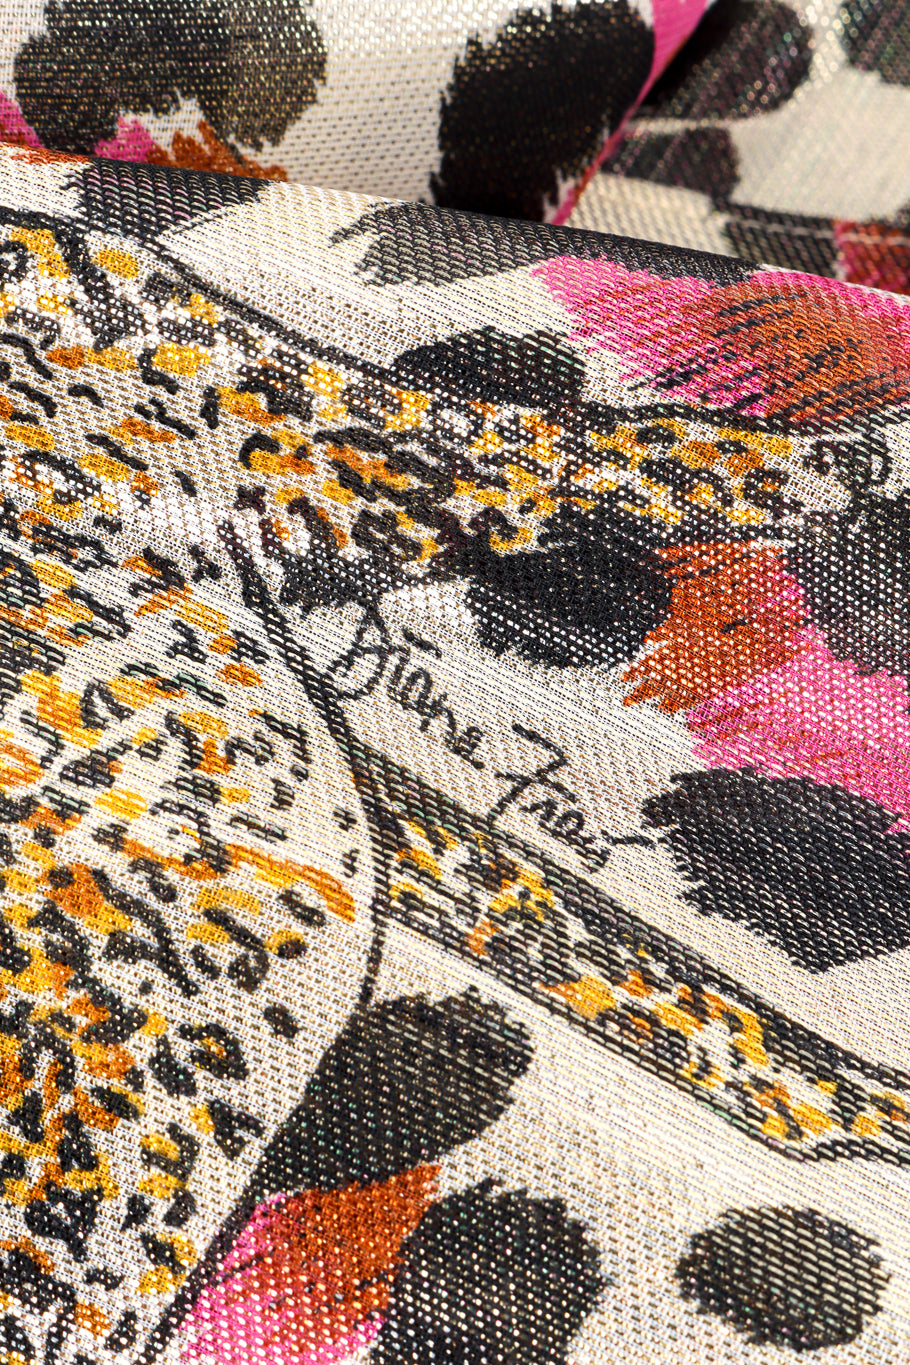 Vintage Diane Freis Metallic Animal Cheetah Dress fabric closeup @recess la